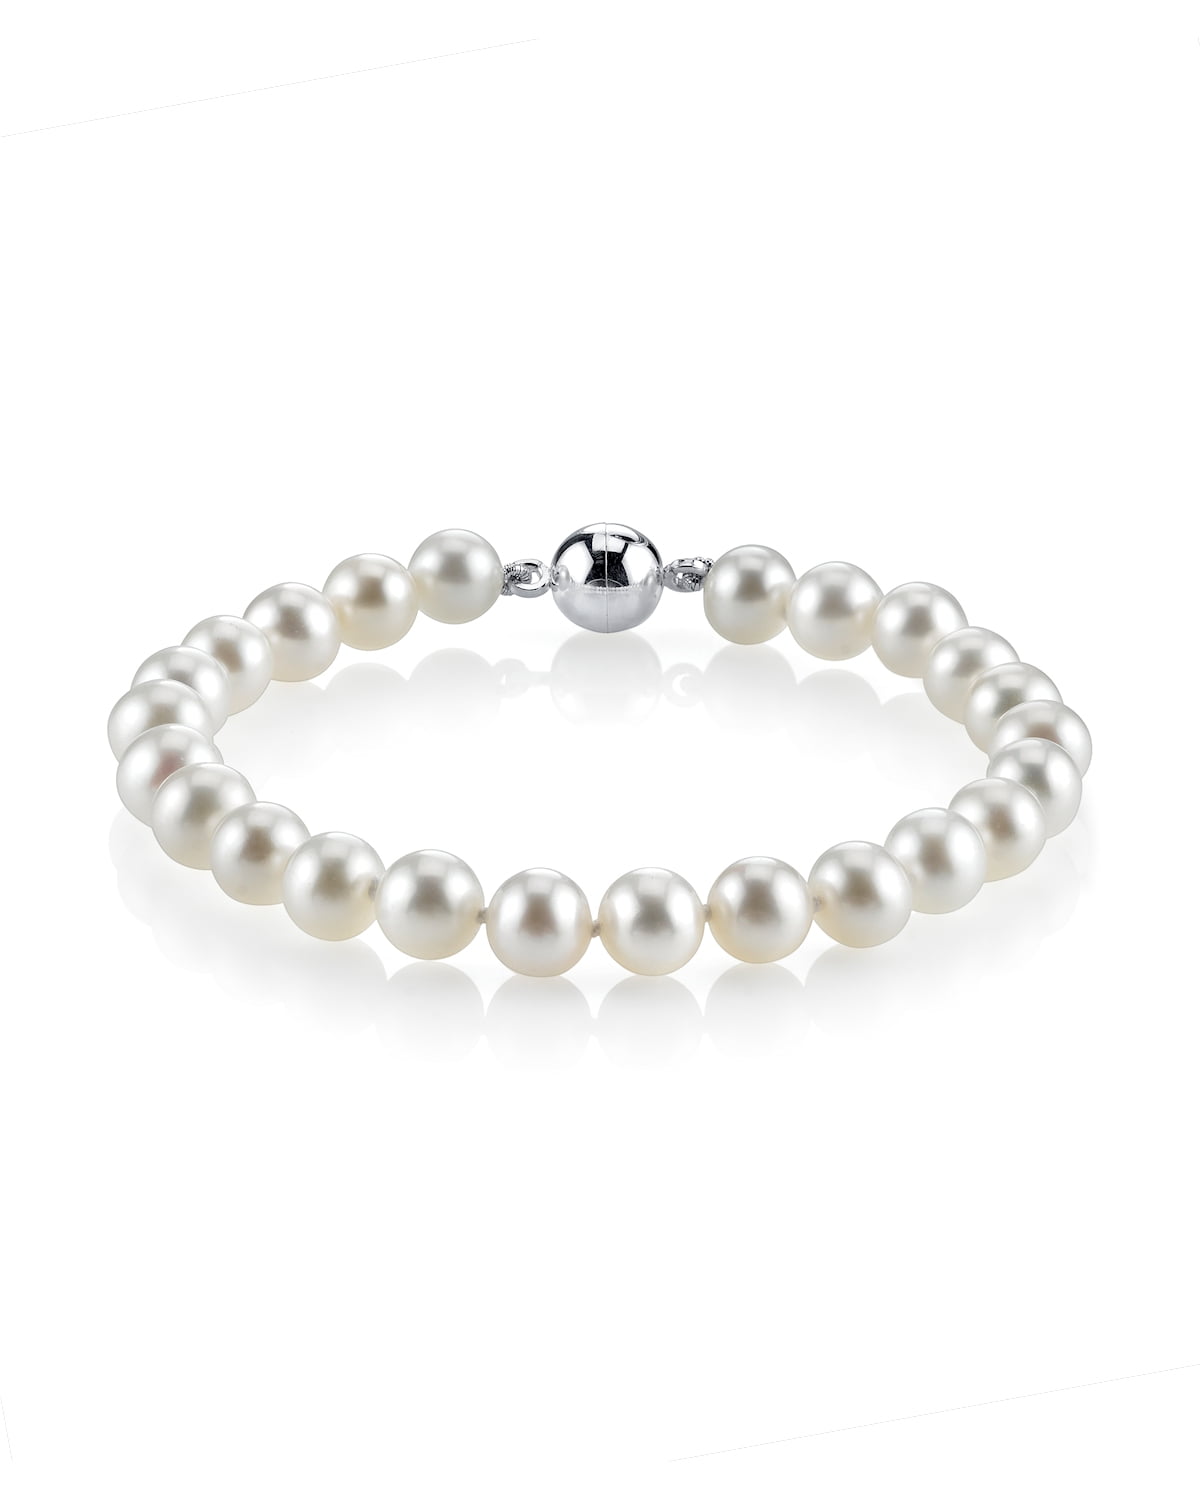 Genuine 7-8MM Natural white Freshwater Cultured Pearl Bracelet Bangle 7.5 